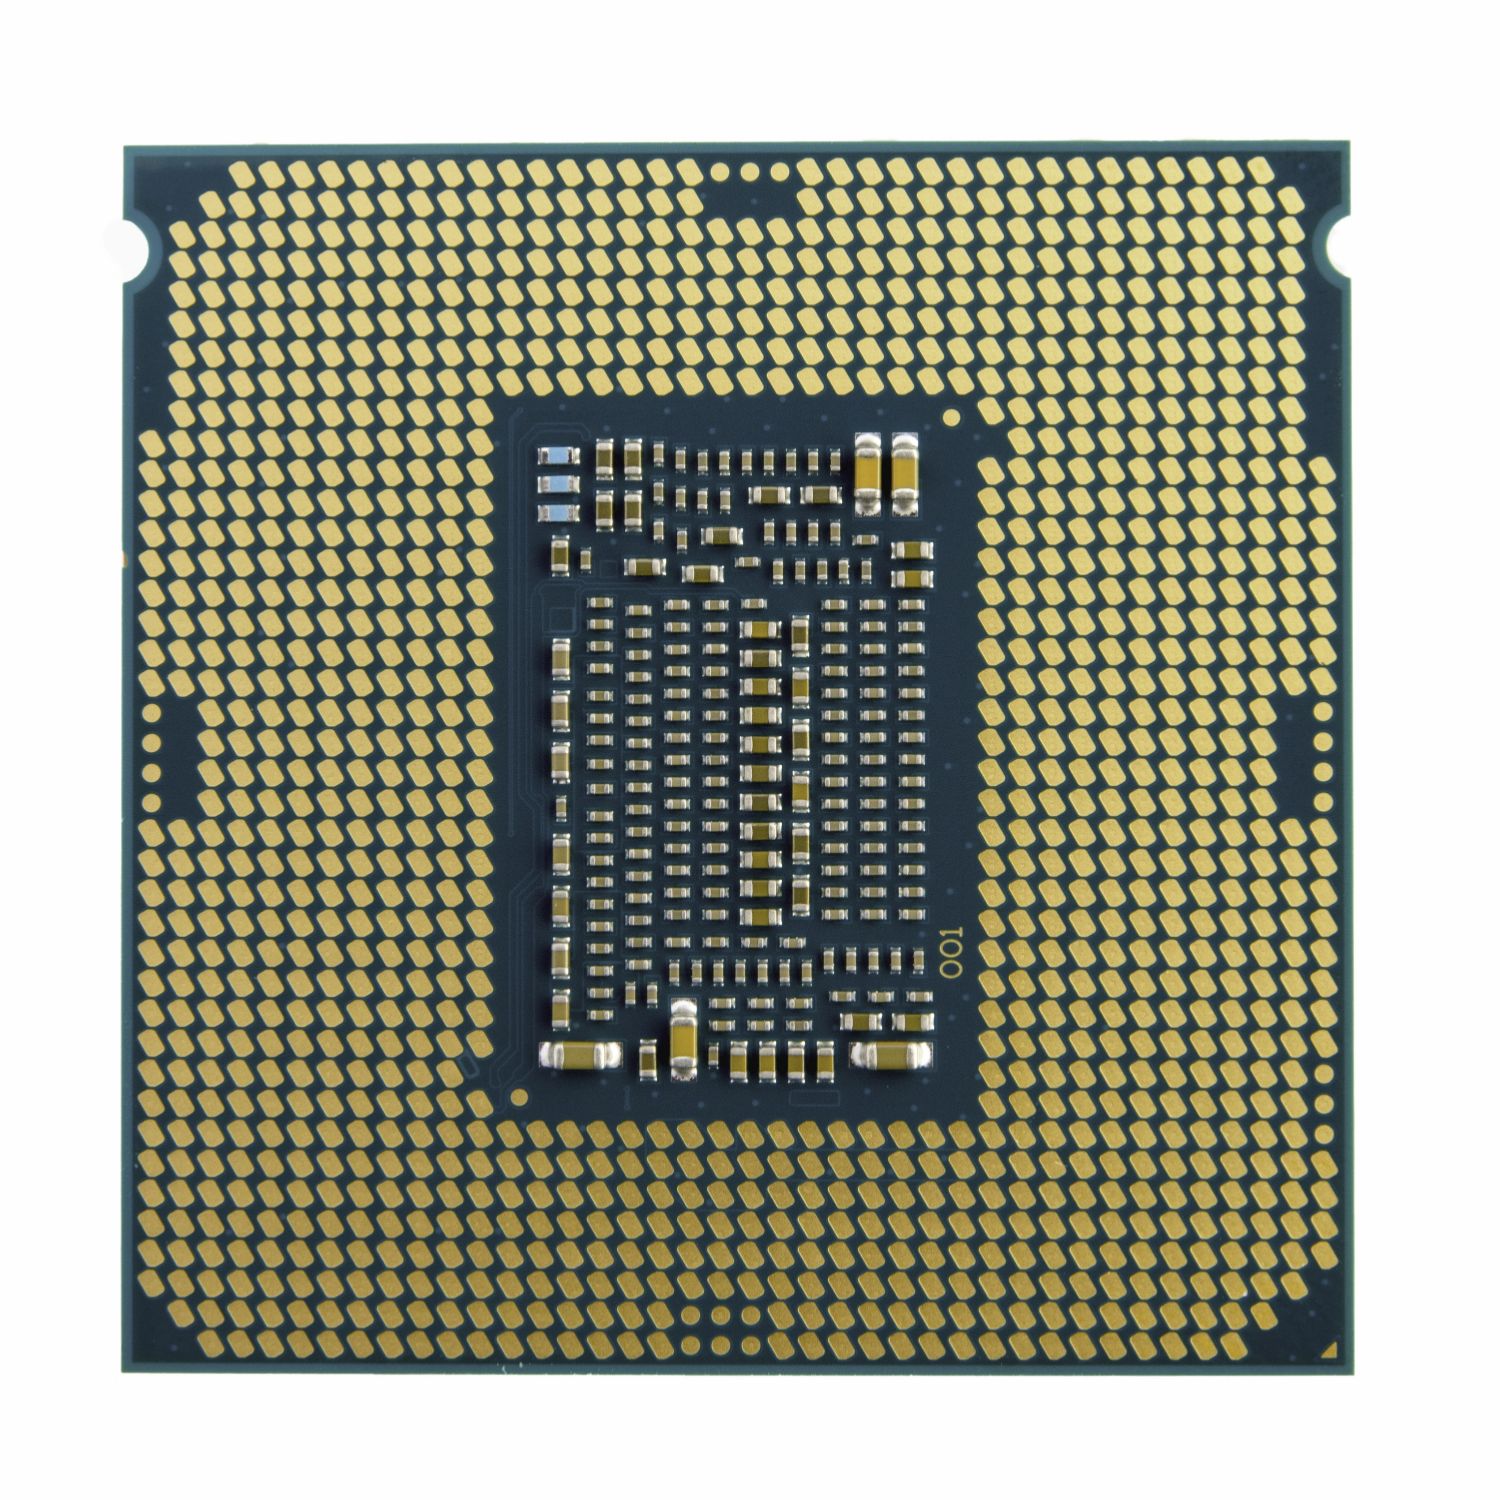 BX80701G5900 - Intel Celeron G5900 LGA1200 3.4Ghz 2Mb (BX80701G5900)